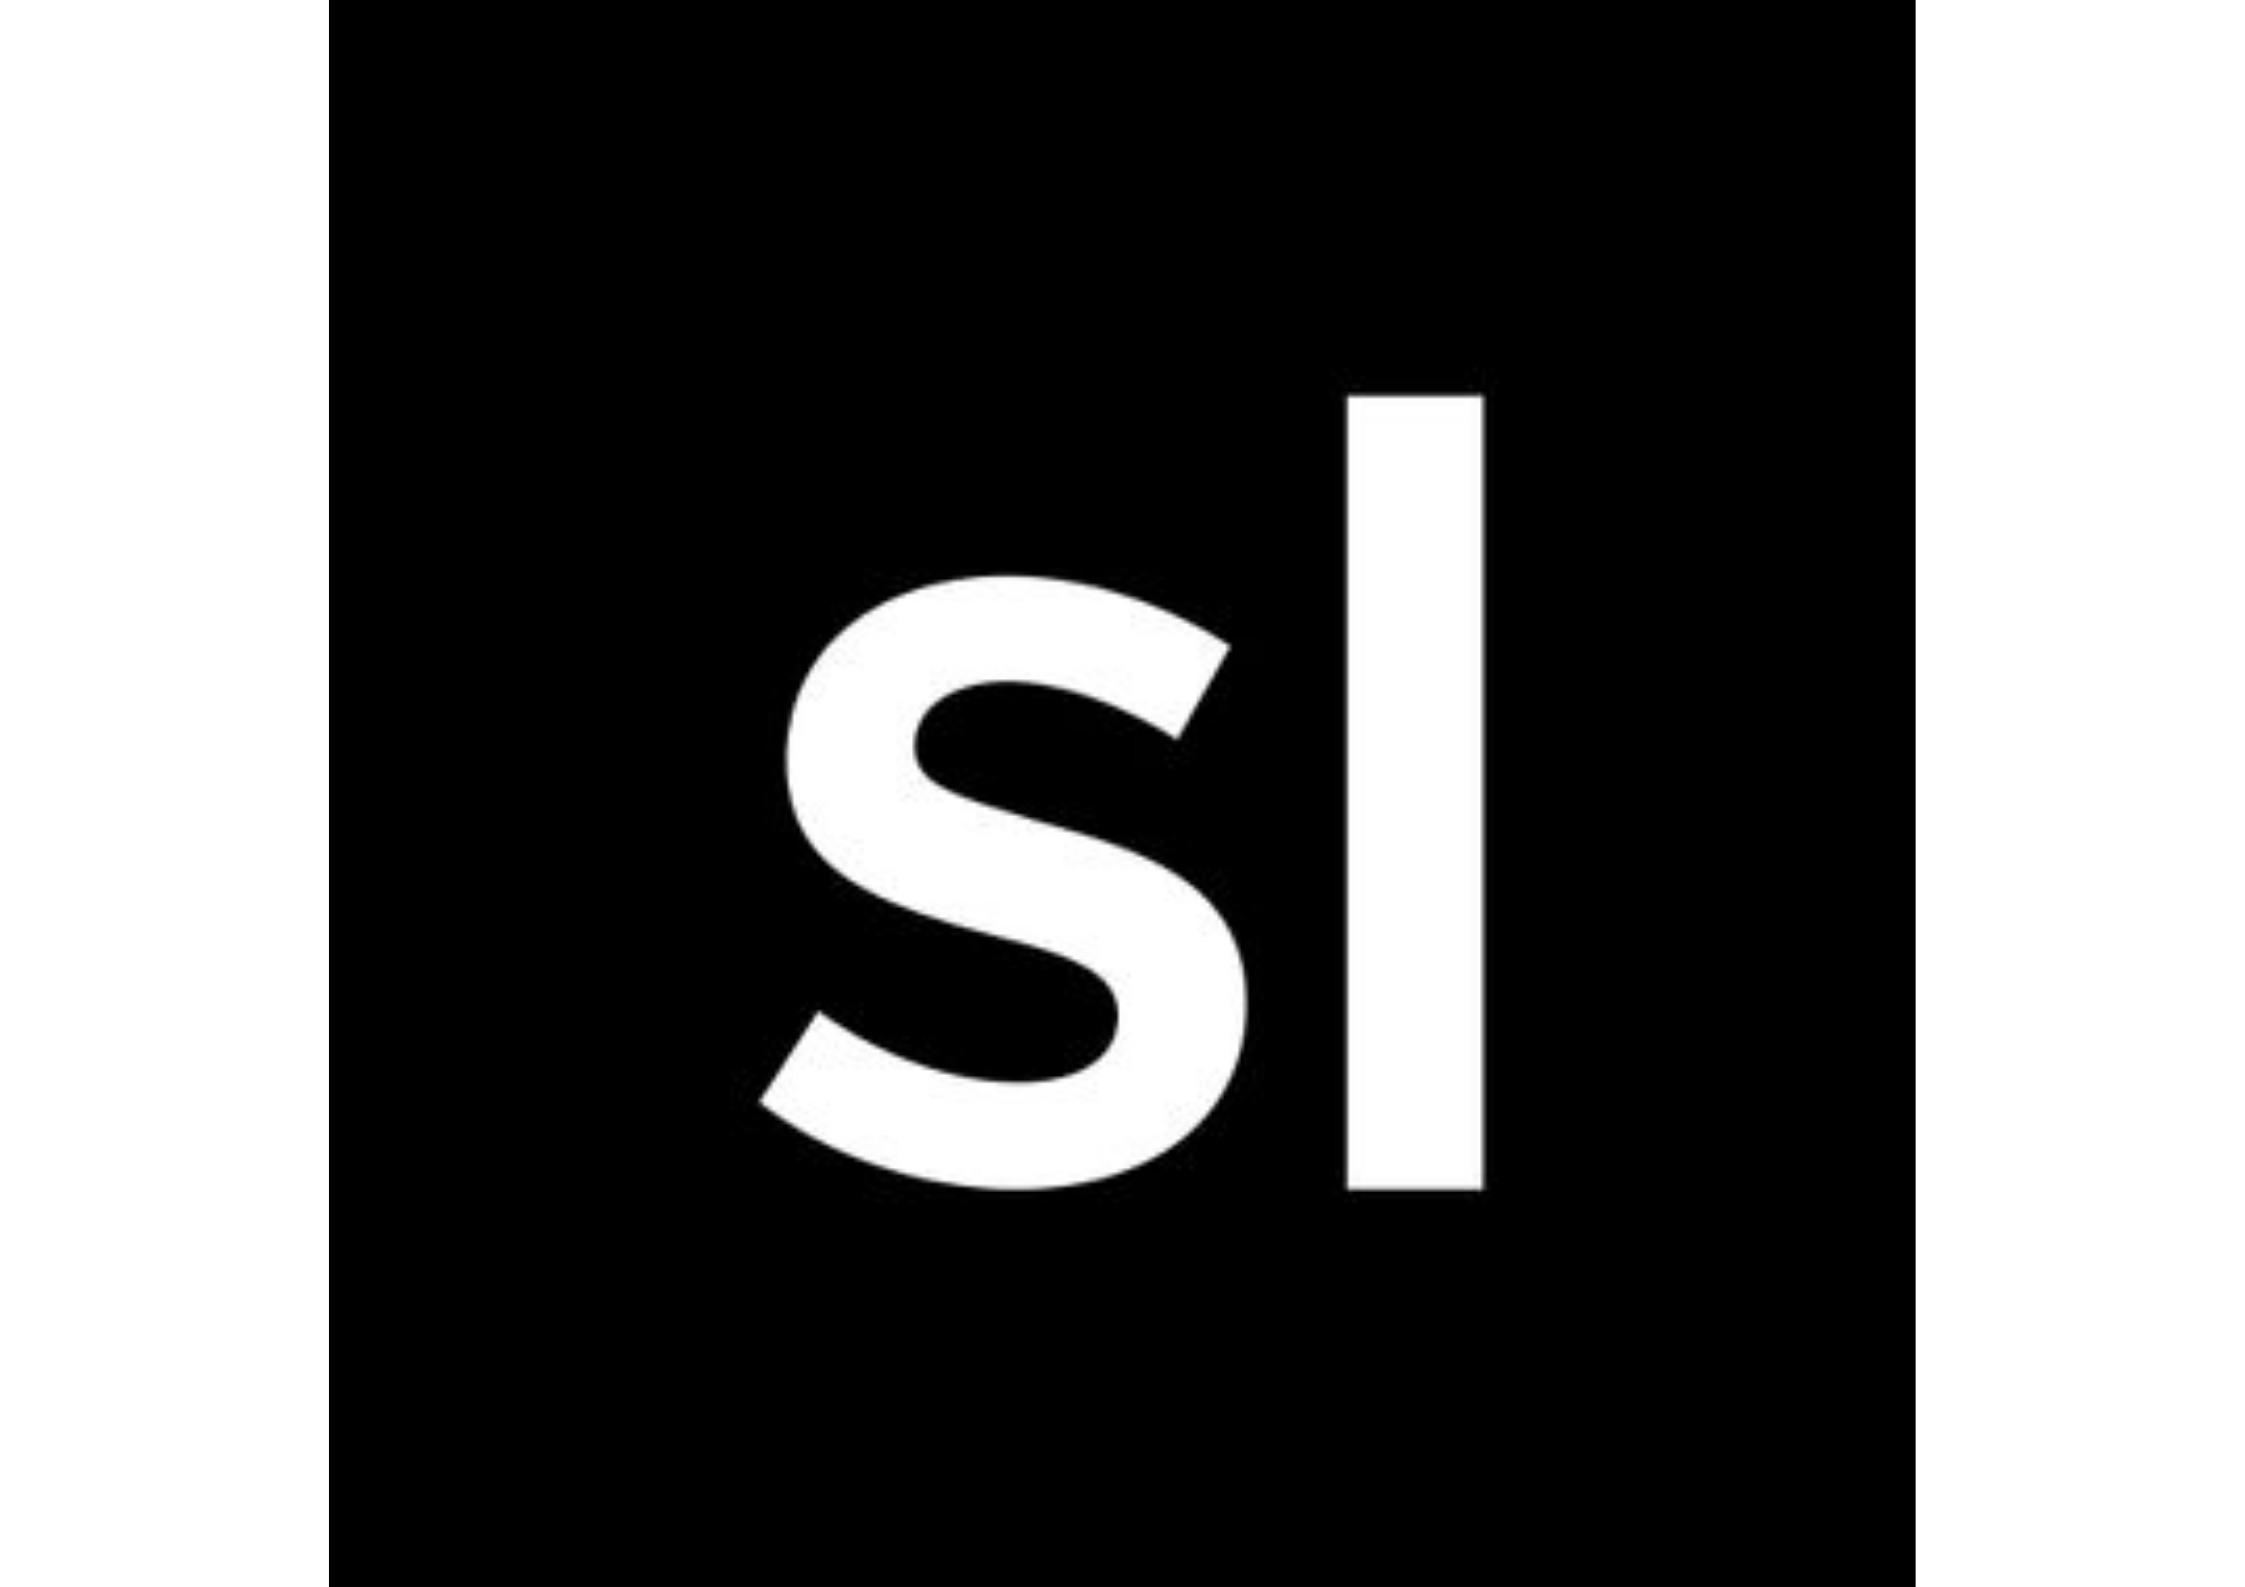 SL logo